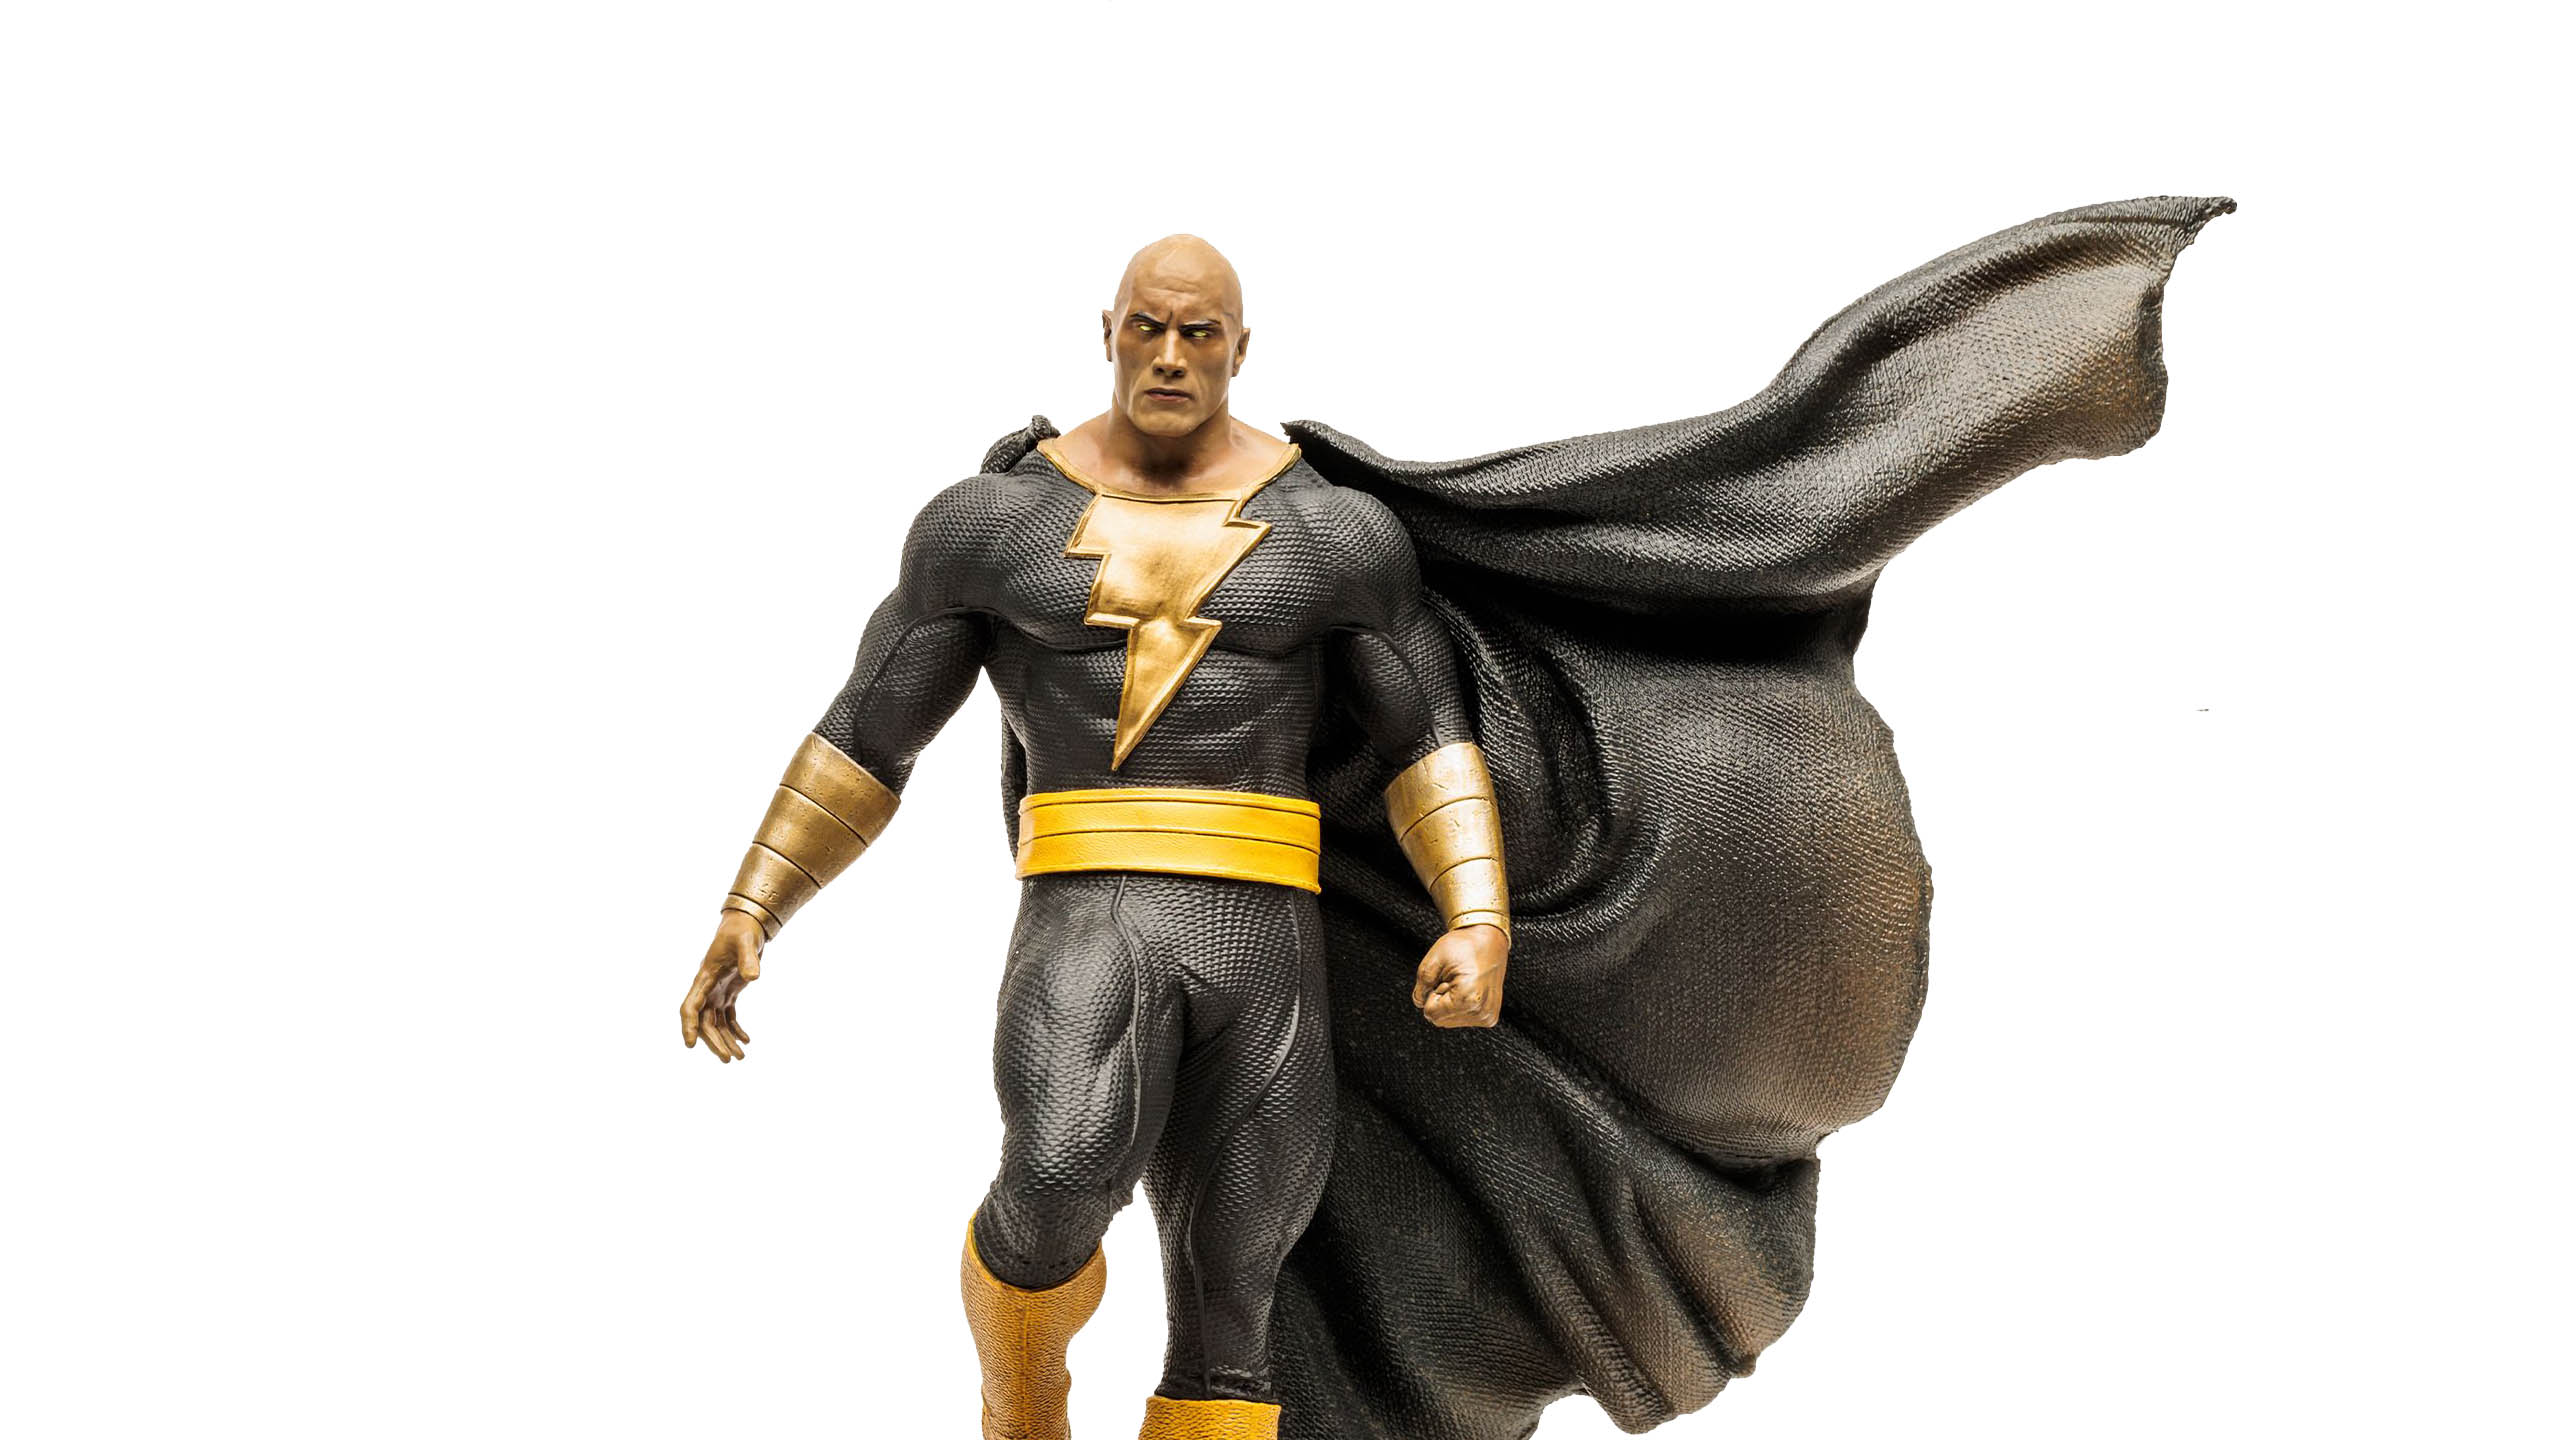 McFarlane Toys announces DC Direct Black Adam statue by Jim Lee